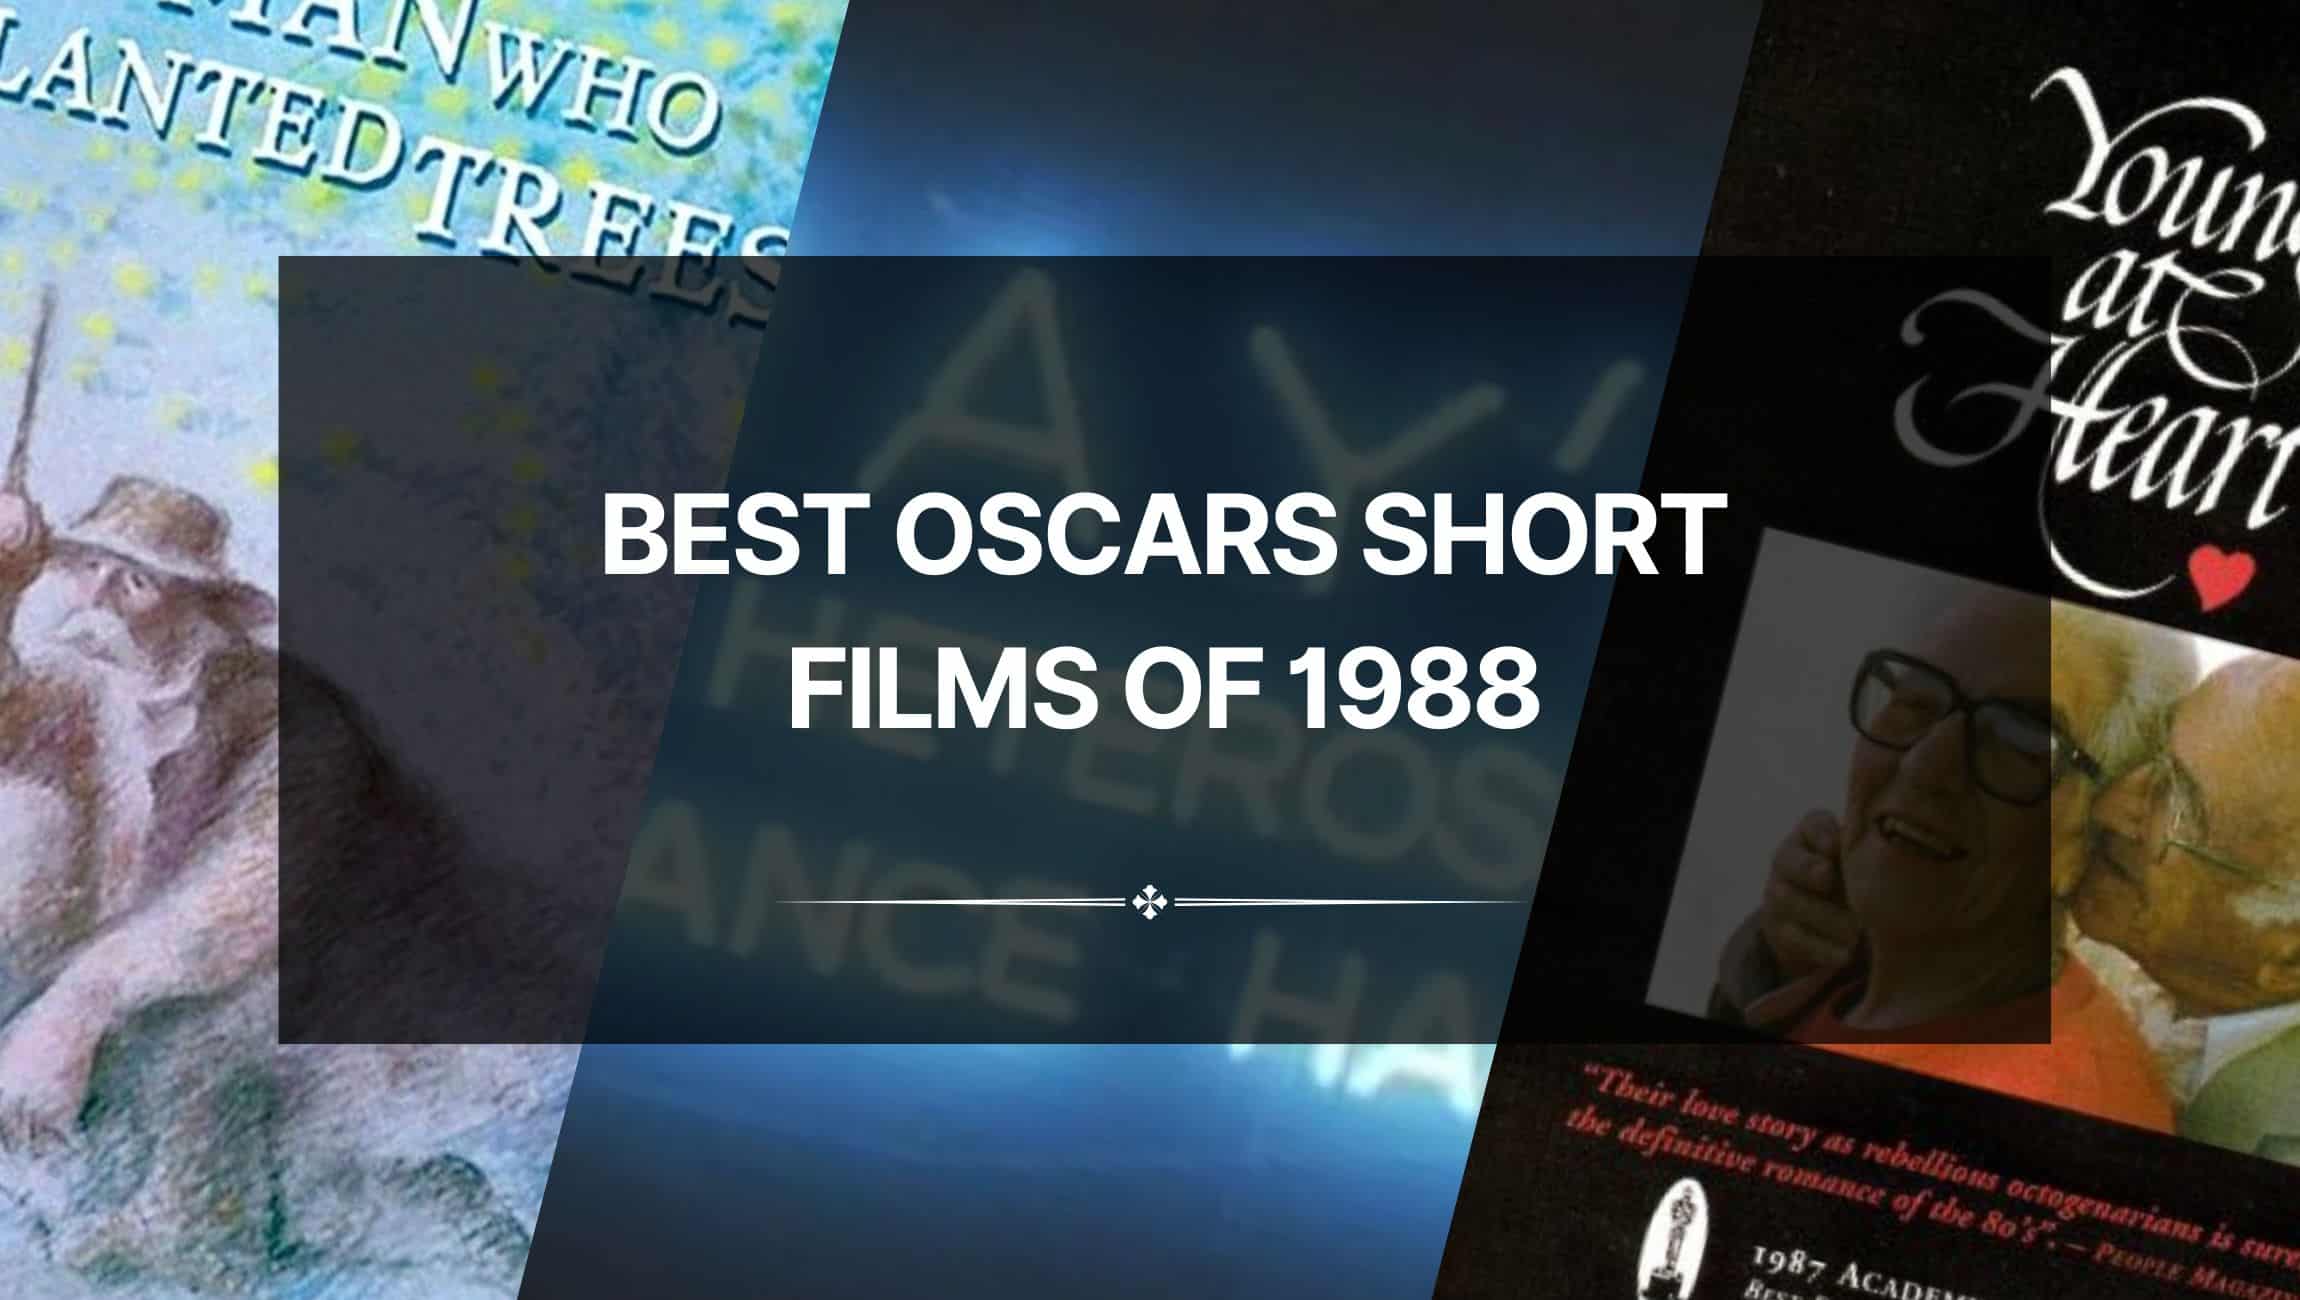 Best Oscars Short Films of 1988